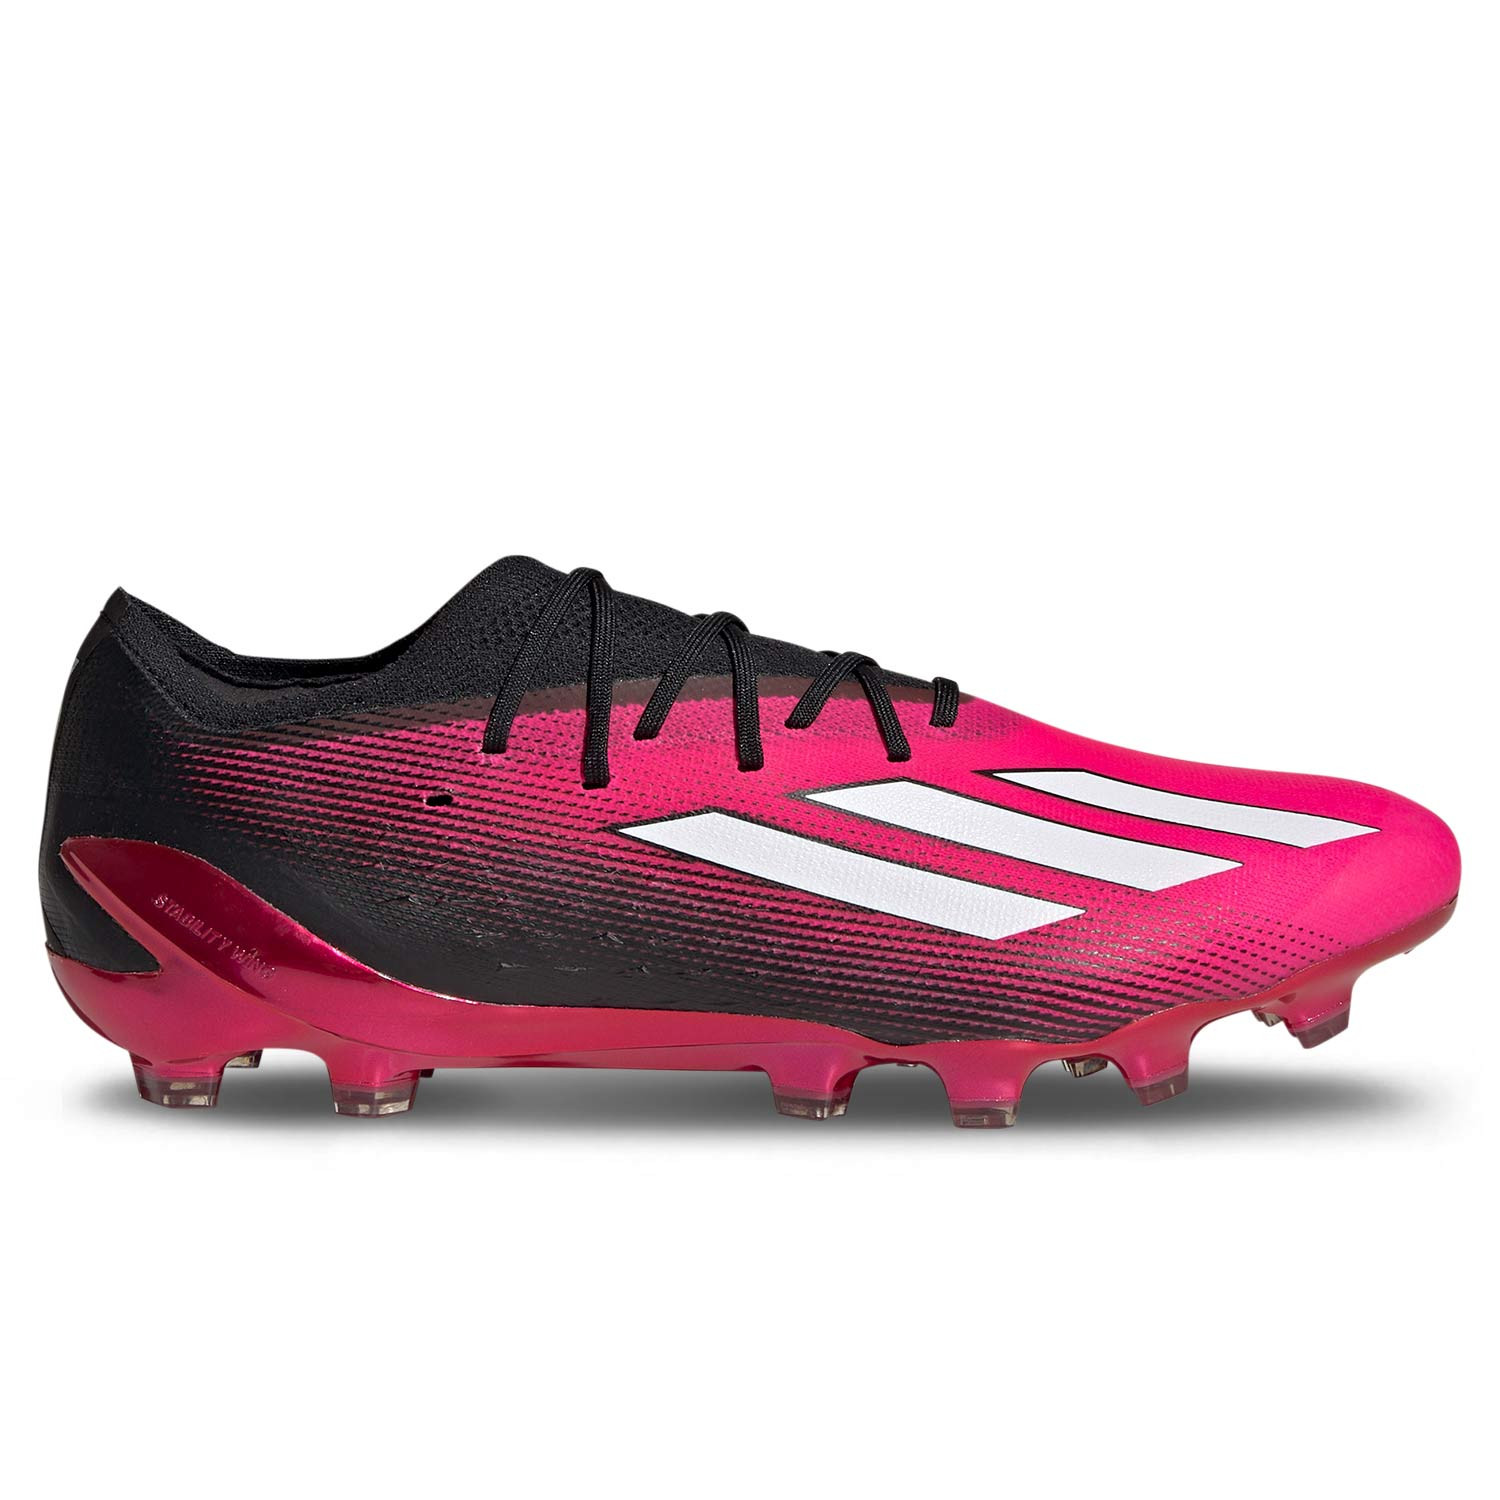 Botas fútbol adidas X AG rosas | futbolmania